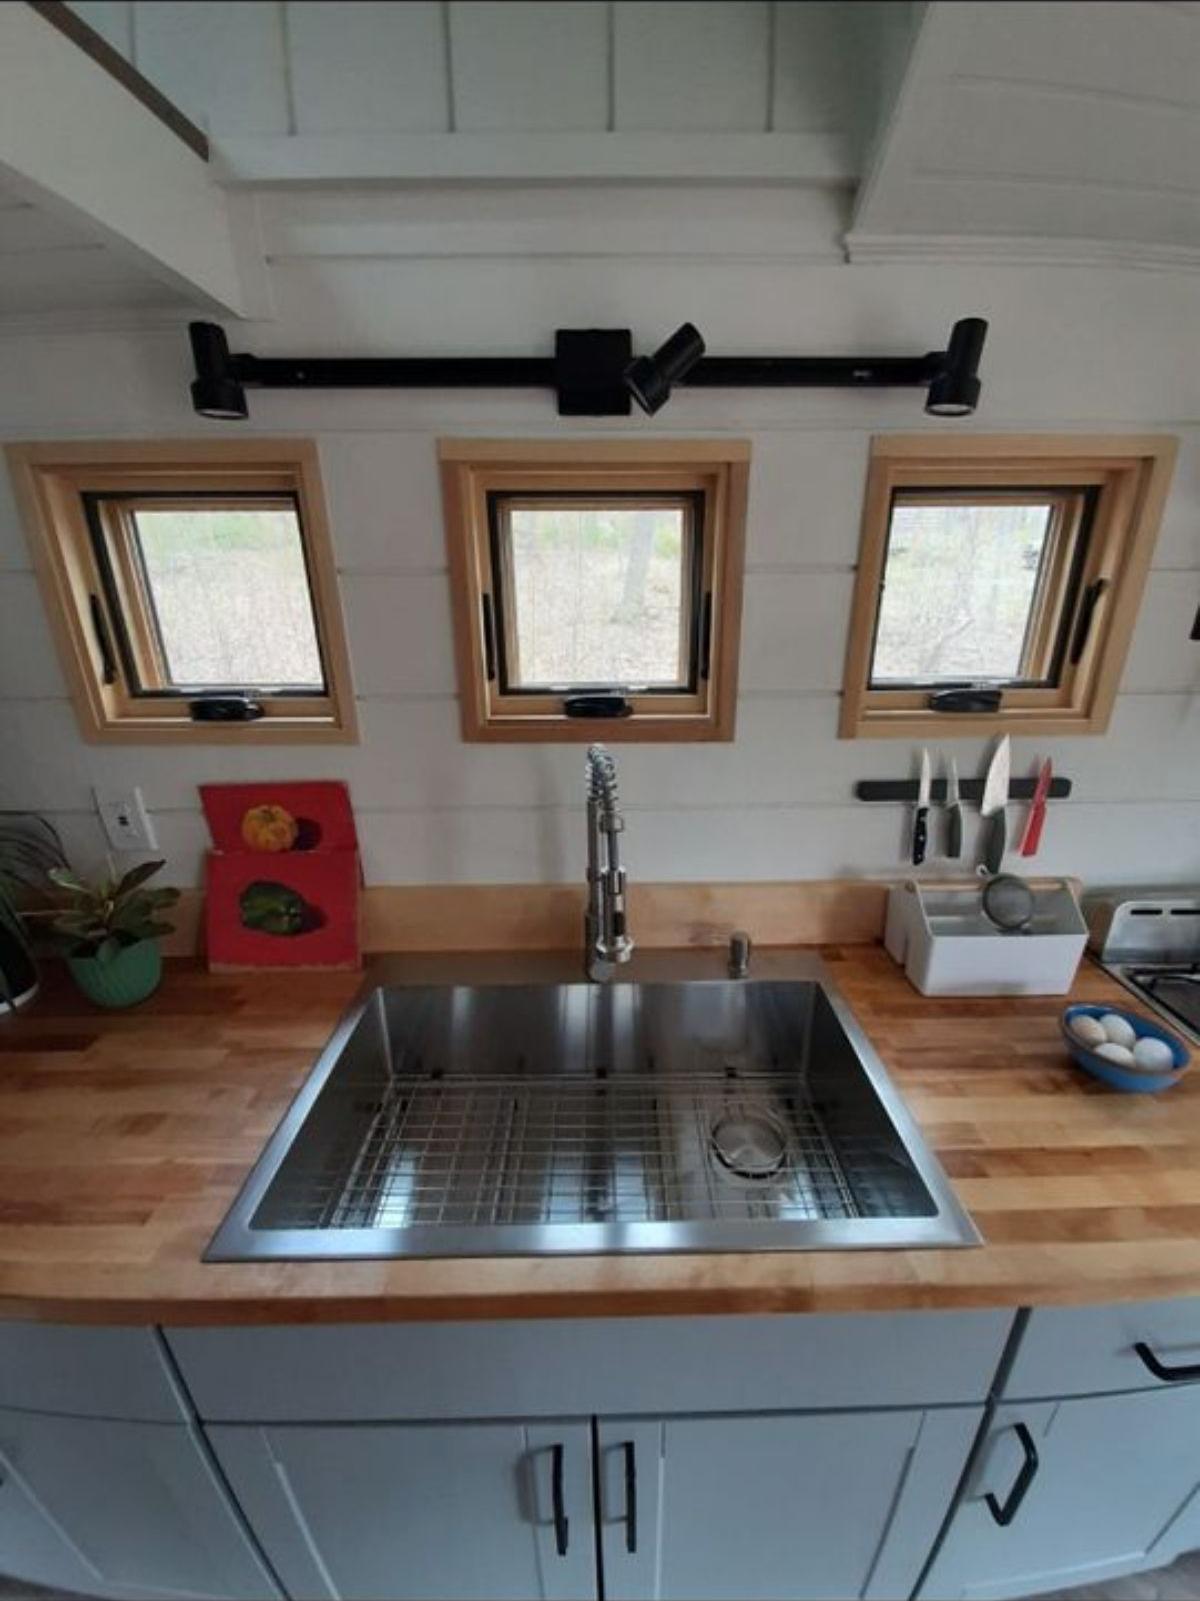 Kitchen area of 24’ Custom Built Tiny Home